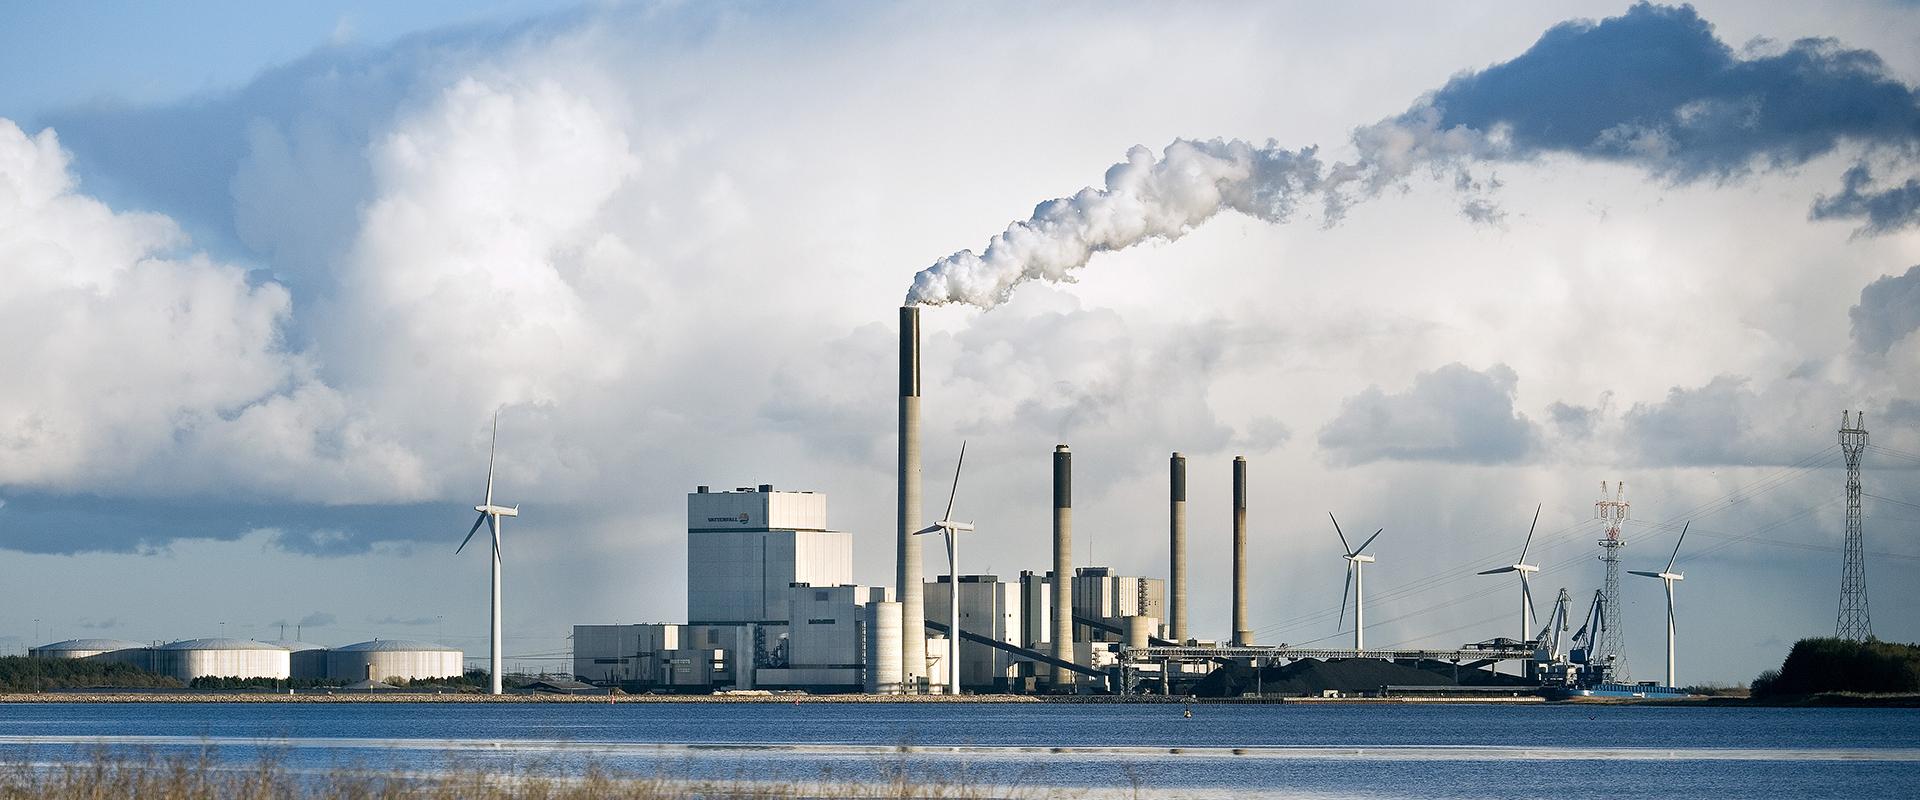 A coal-fired power plant, Denmark